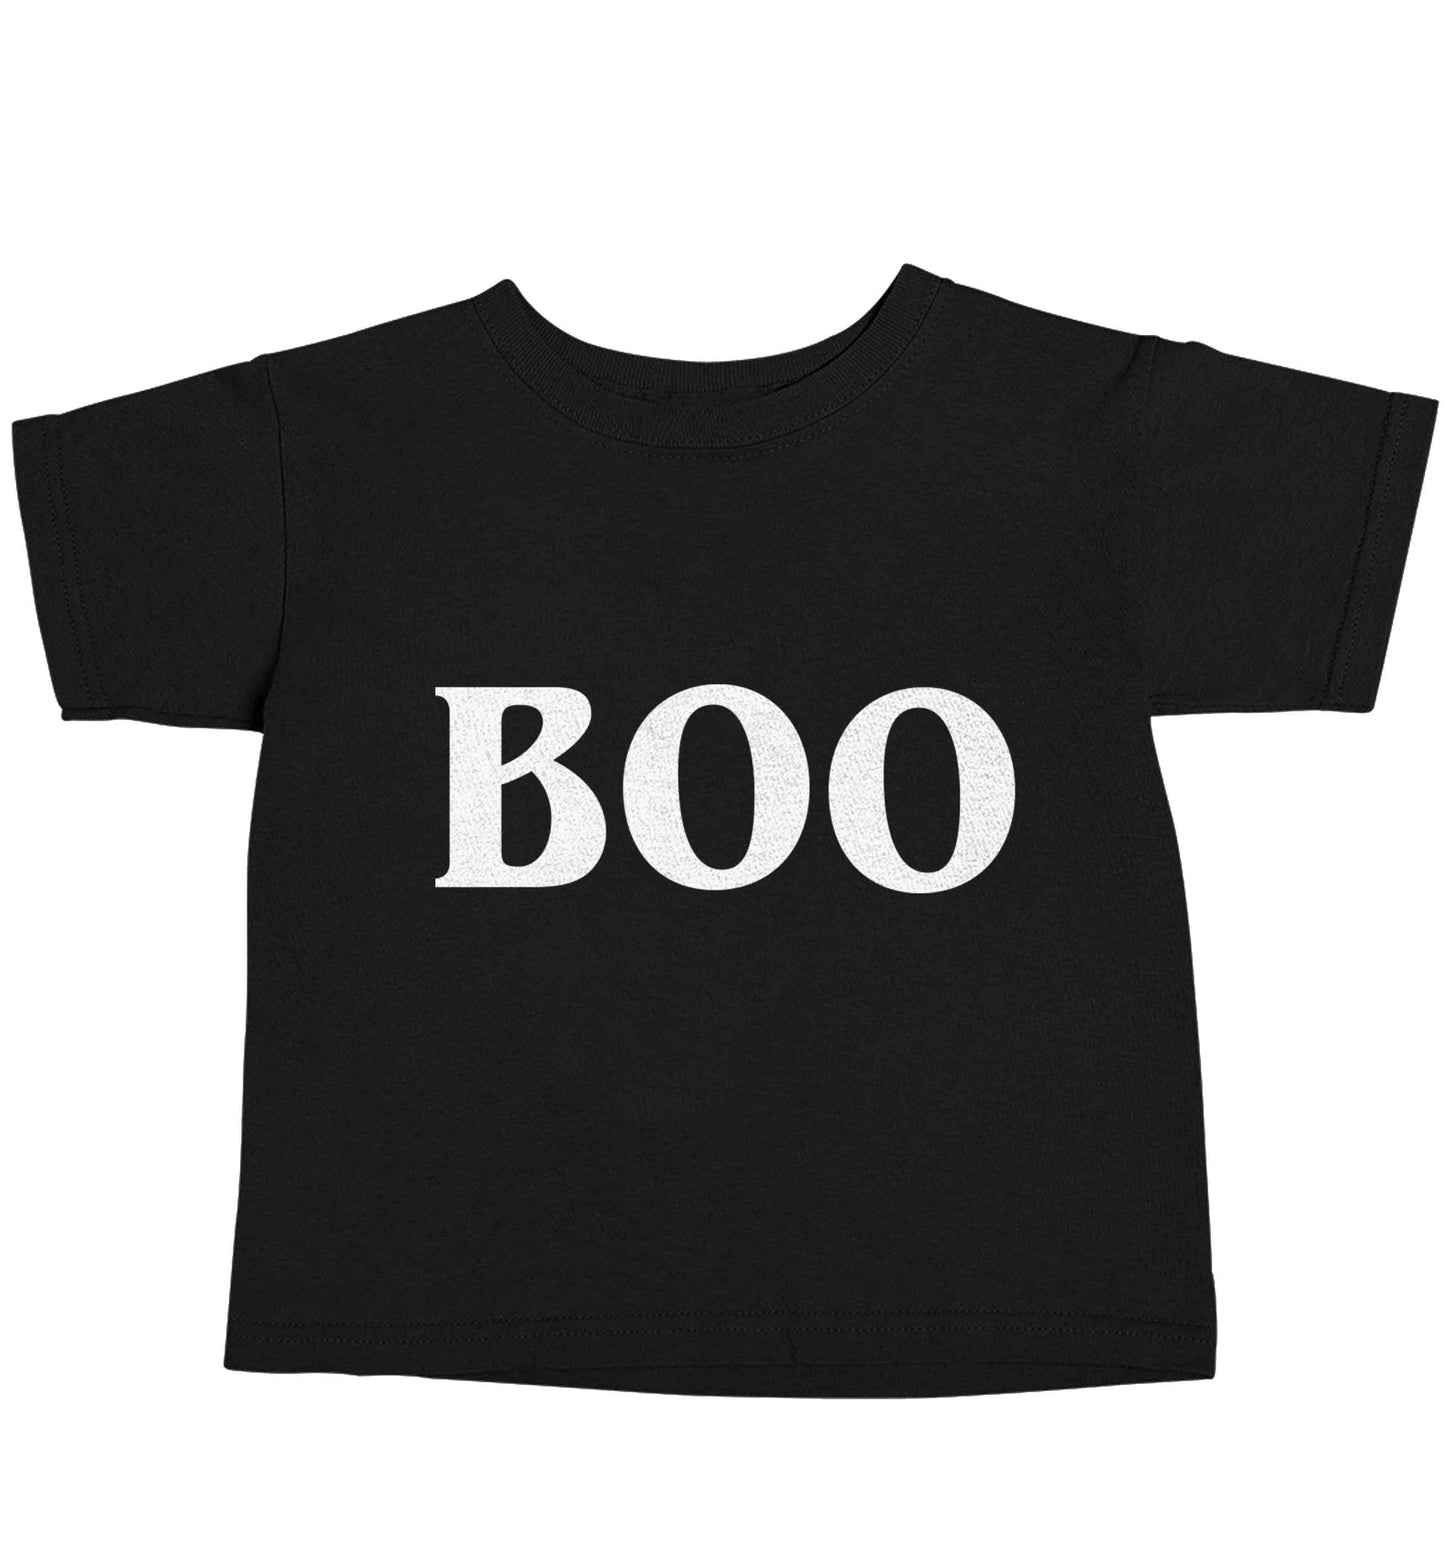 Boo Black baby toddler Tshirt 2 years